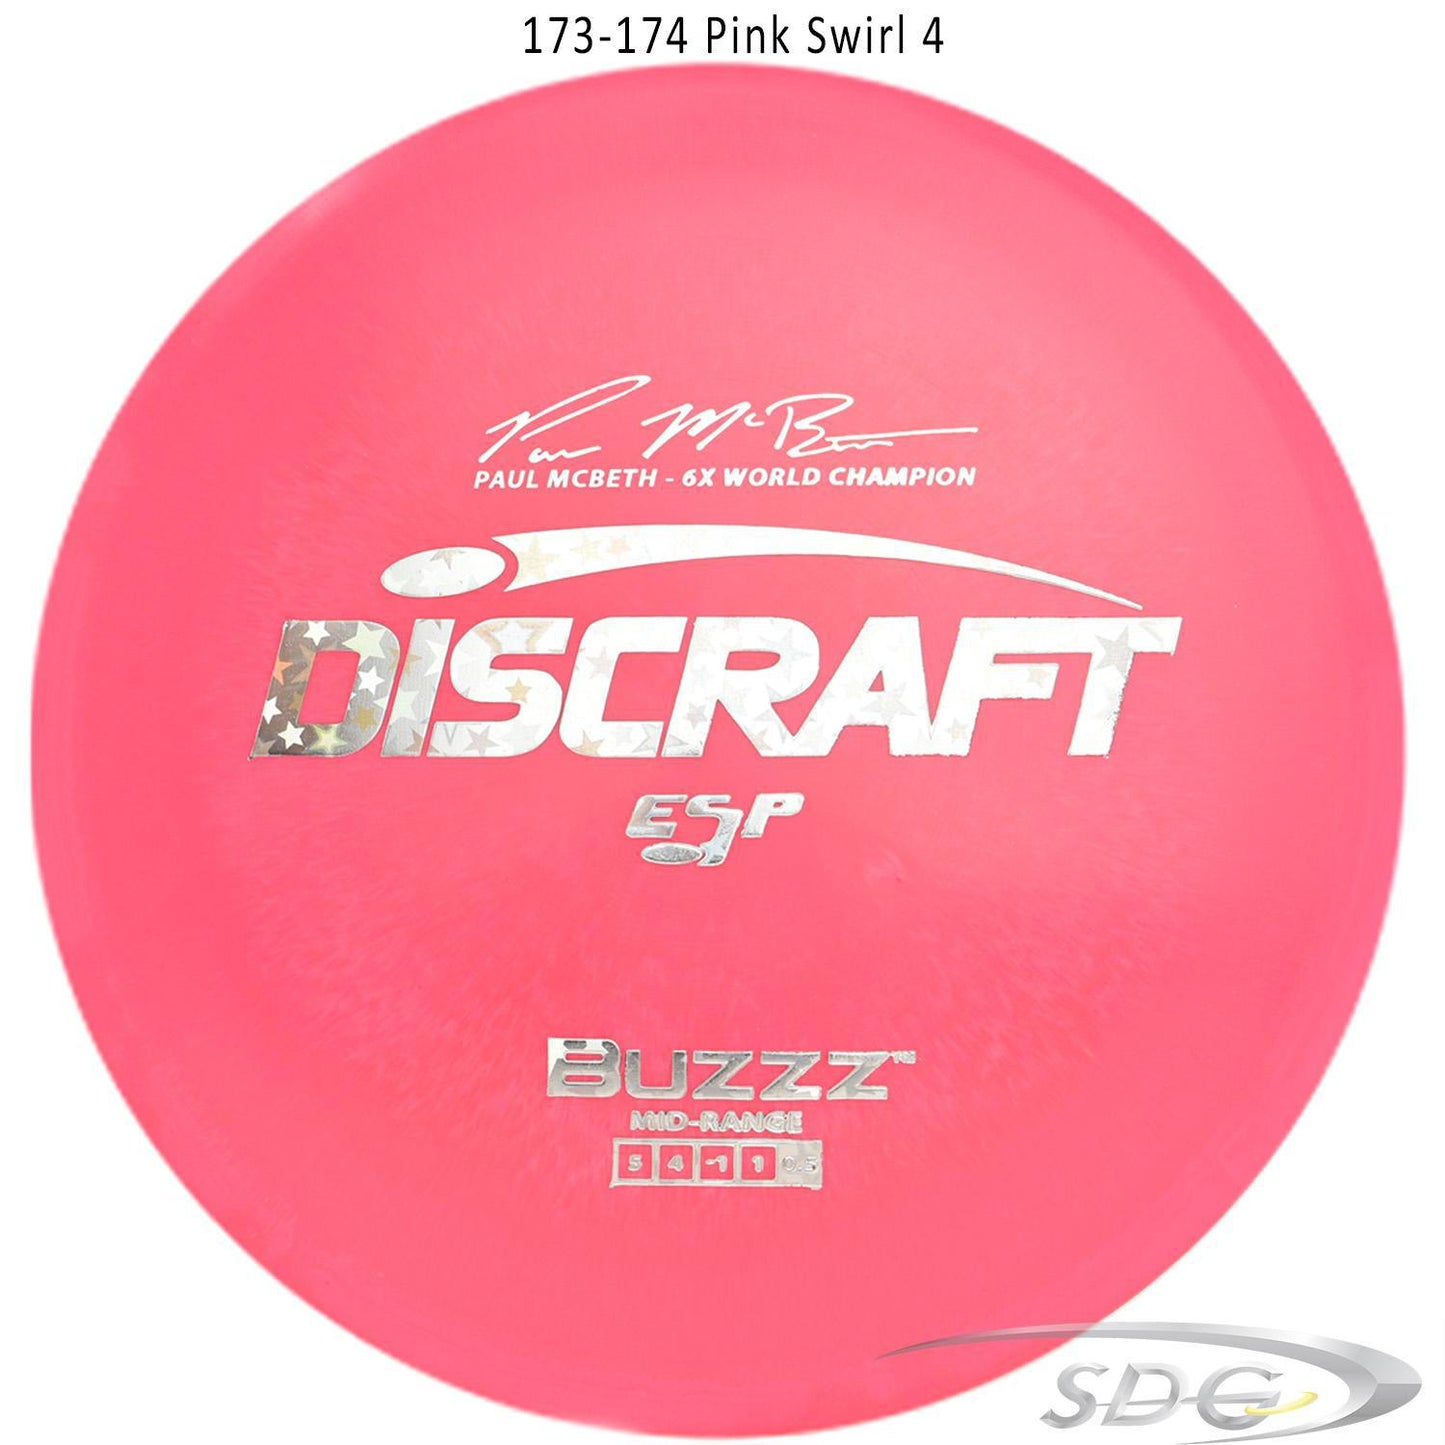 discraft-esp-buzzz-6x-paul-mcbeth-signature-series-disc-golf-mid-range-176-173-weights 173-174 Pink Swirl 4 